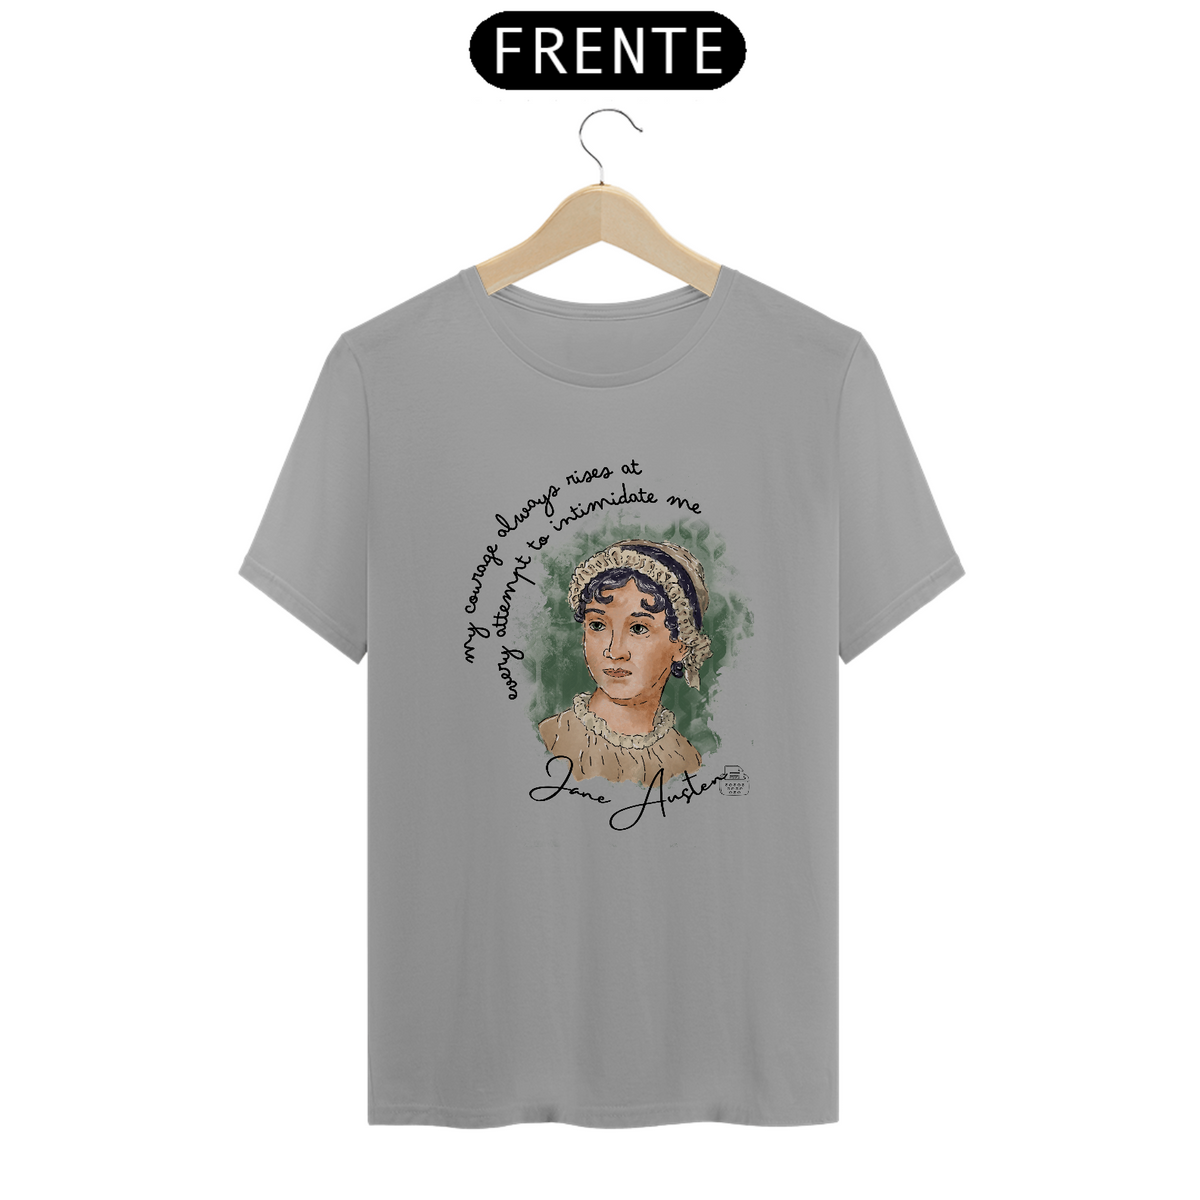 Nome do produto: My courage always rises, Jane Austen TShirt Quality (Branca/Cinza)